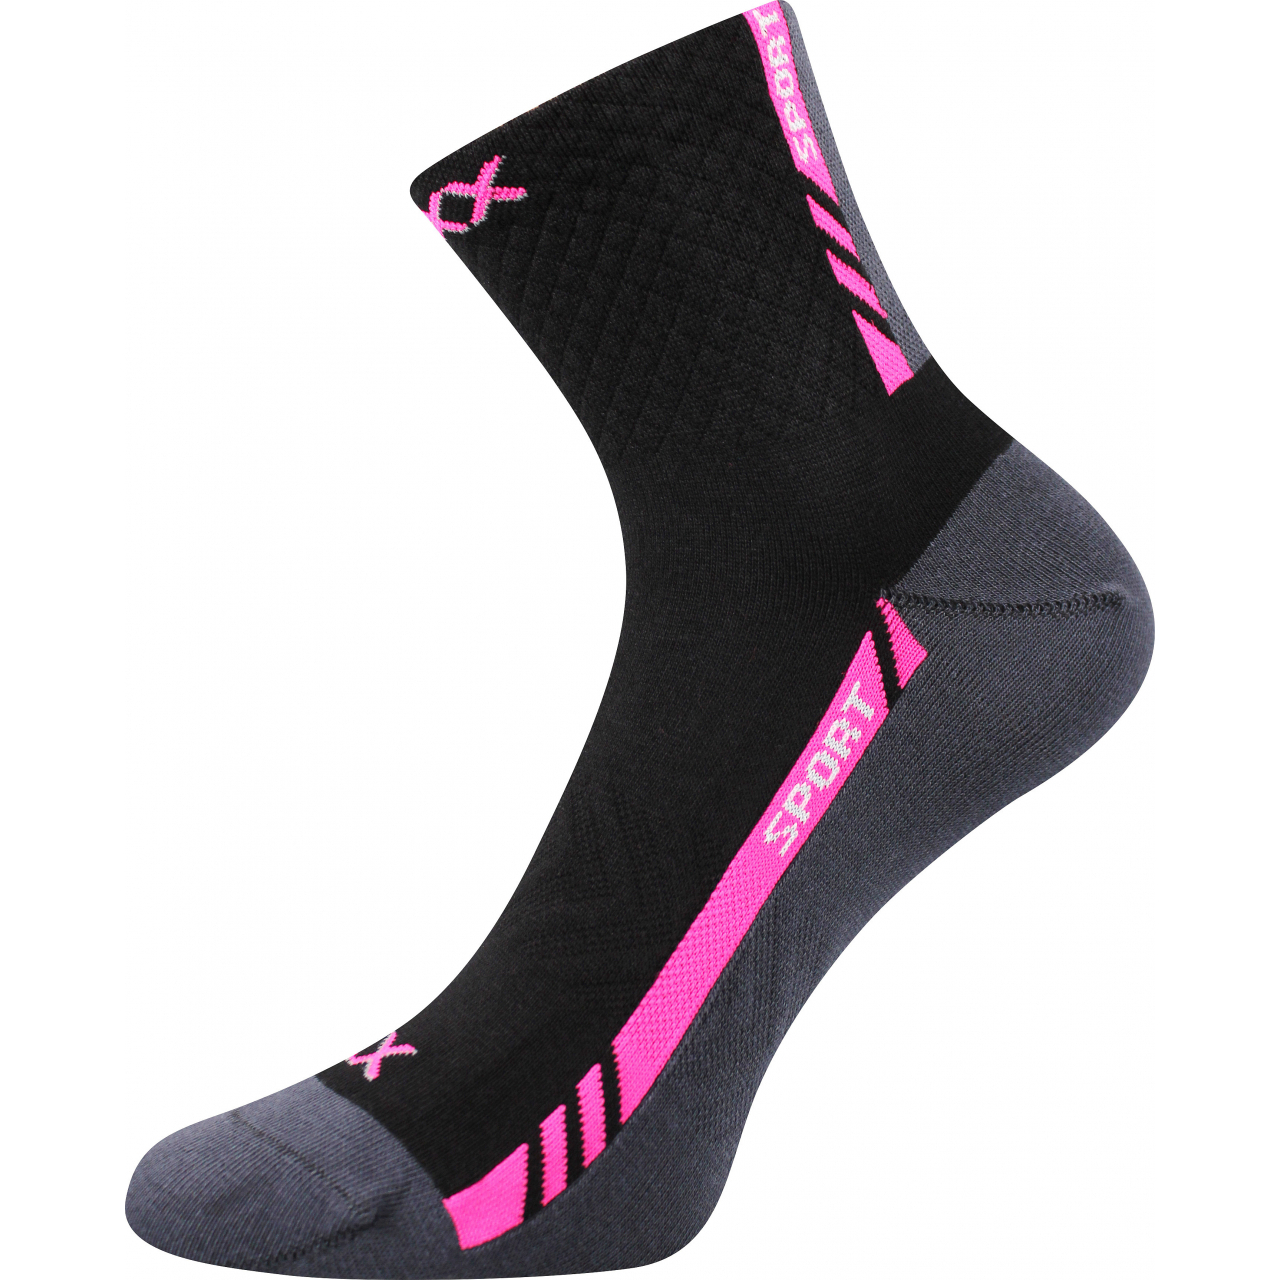 Ponožky slabé sportovní unisex Voxx Pius - černé-růžové, 35-38